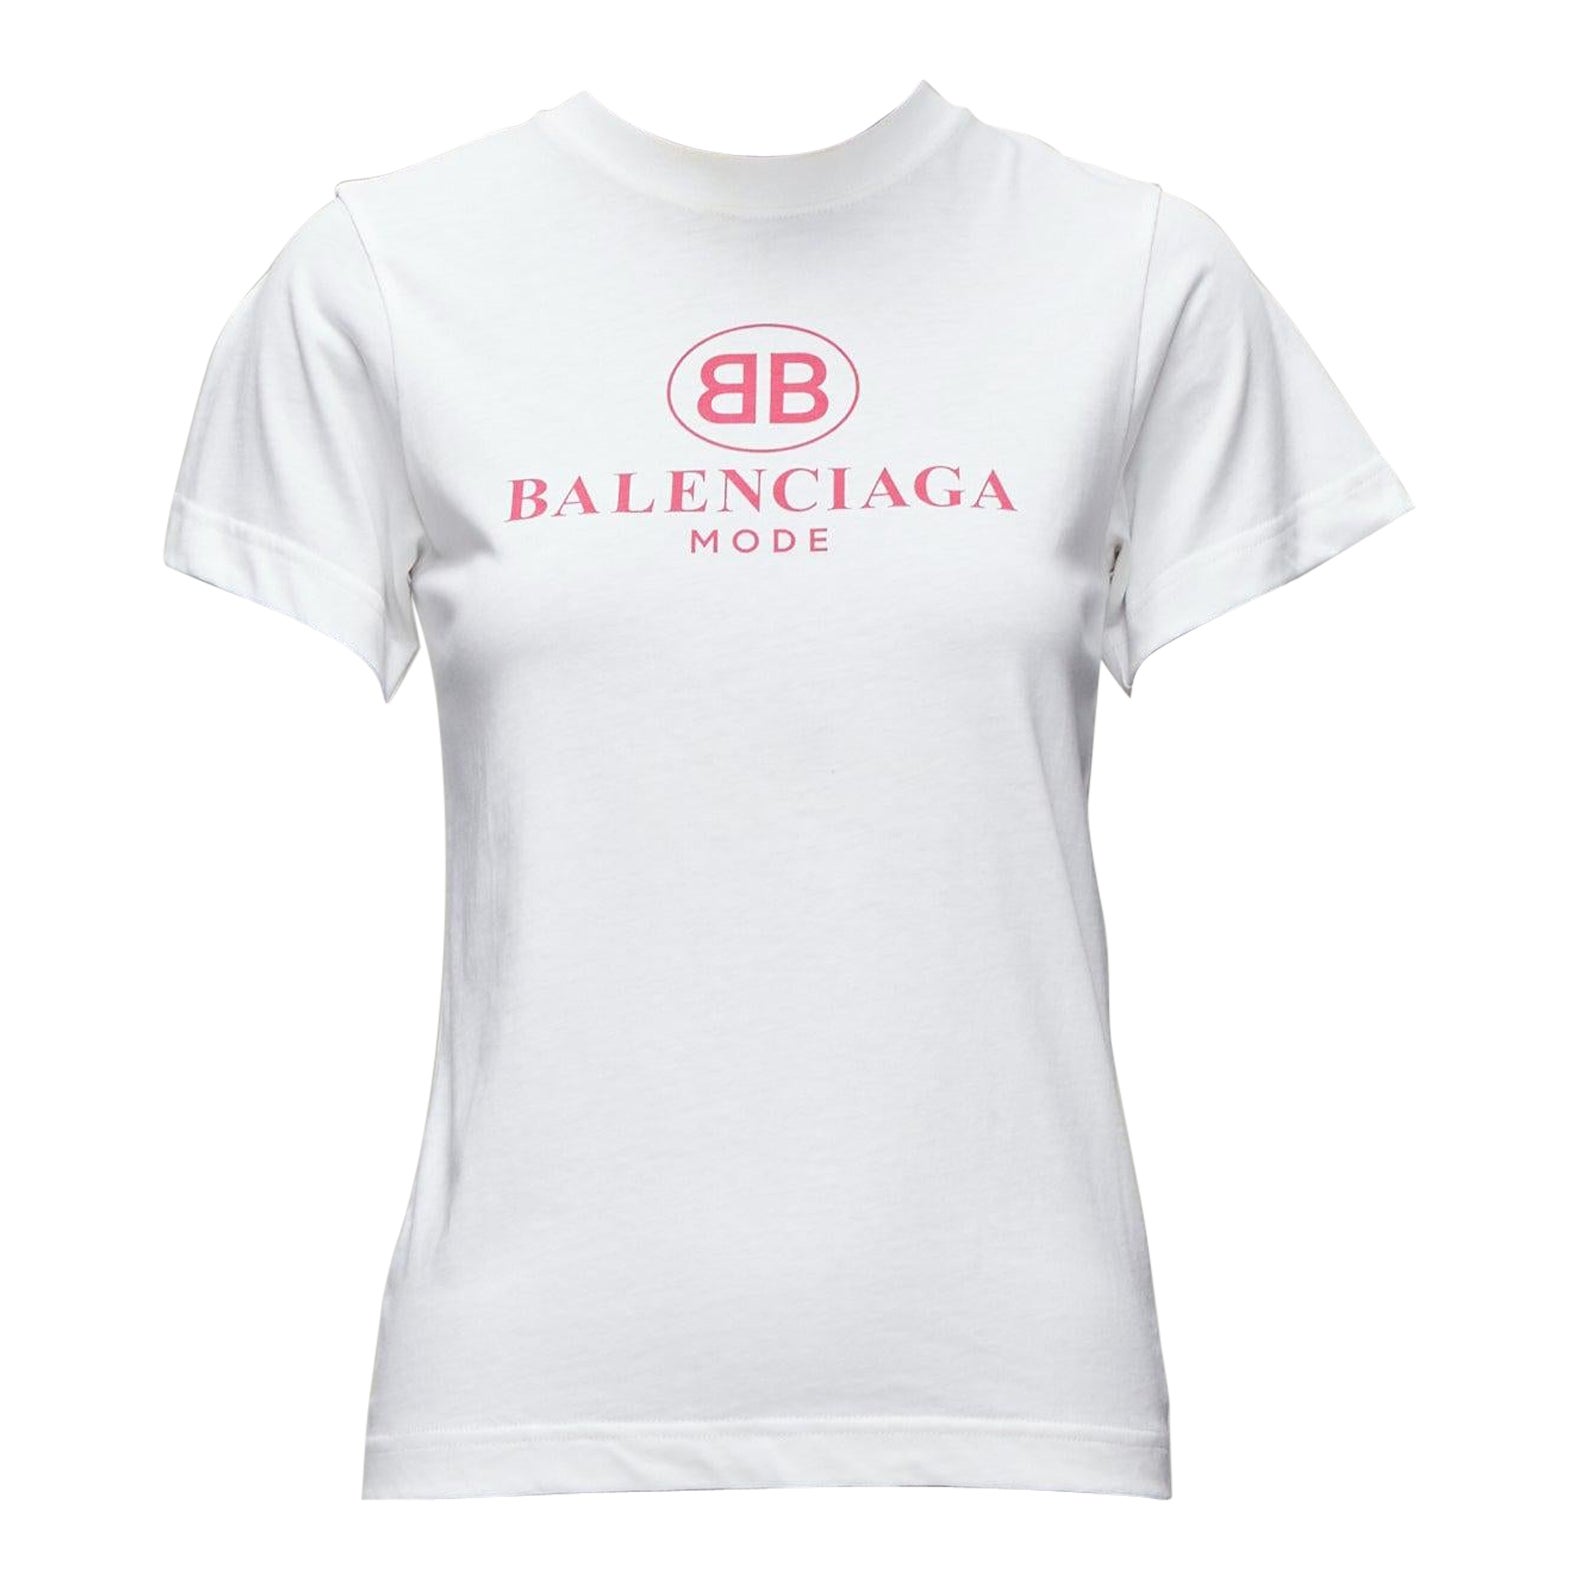 BALENCIAGA 2017 Mode pink logo print short sleeve white cotton tshirt XS For Sale